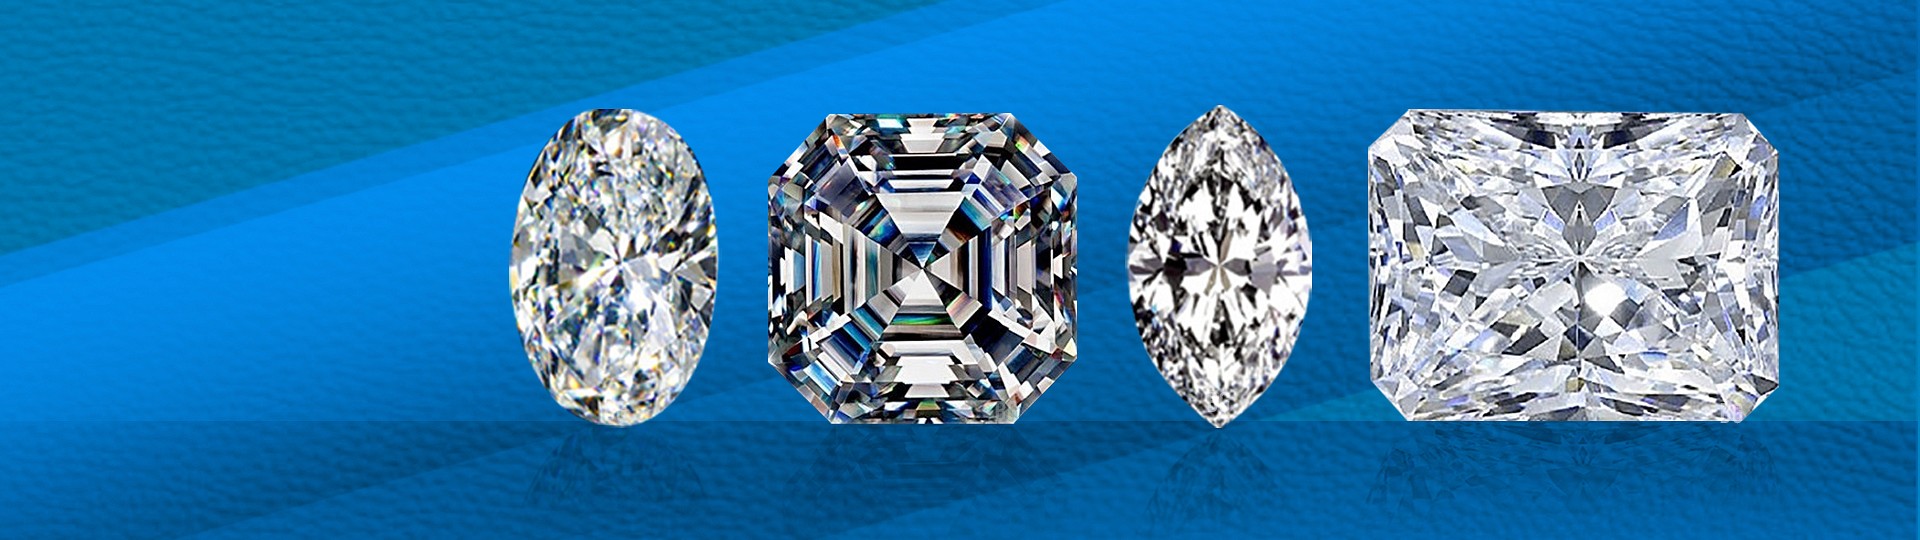 BLACK FRIDAY NO RESERVE - GIA Diamonds by Bid Global International Auctioneers LLC